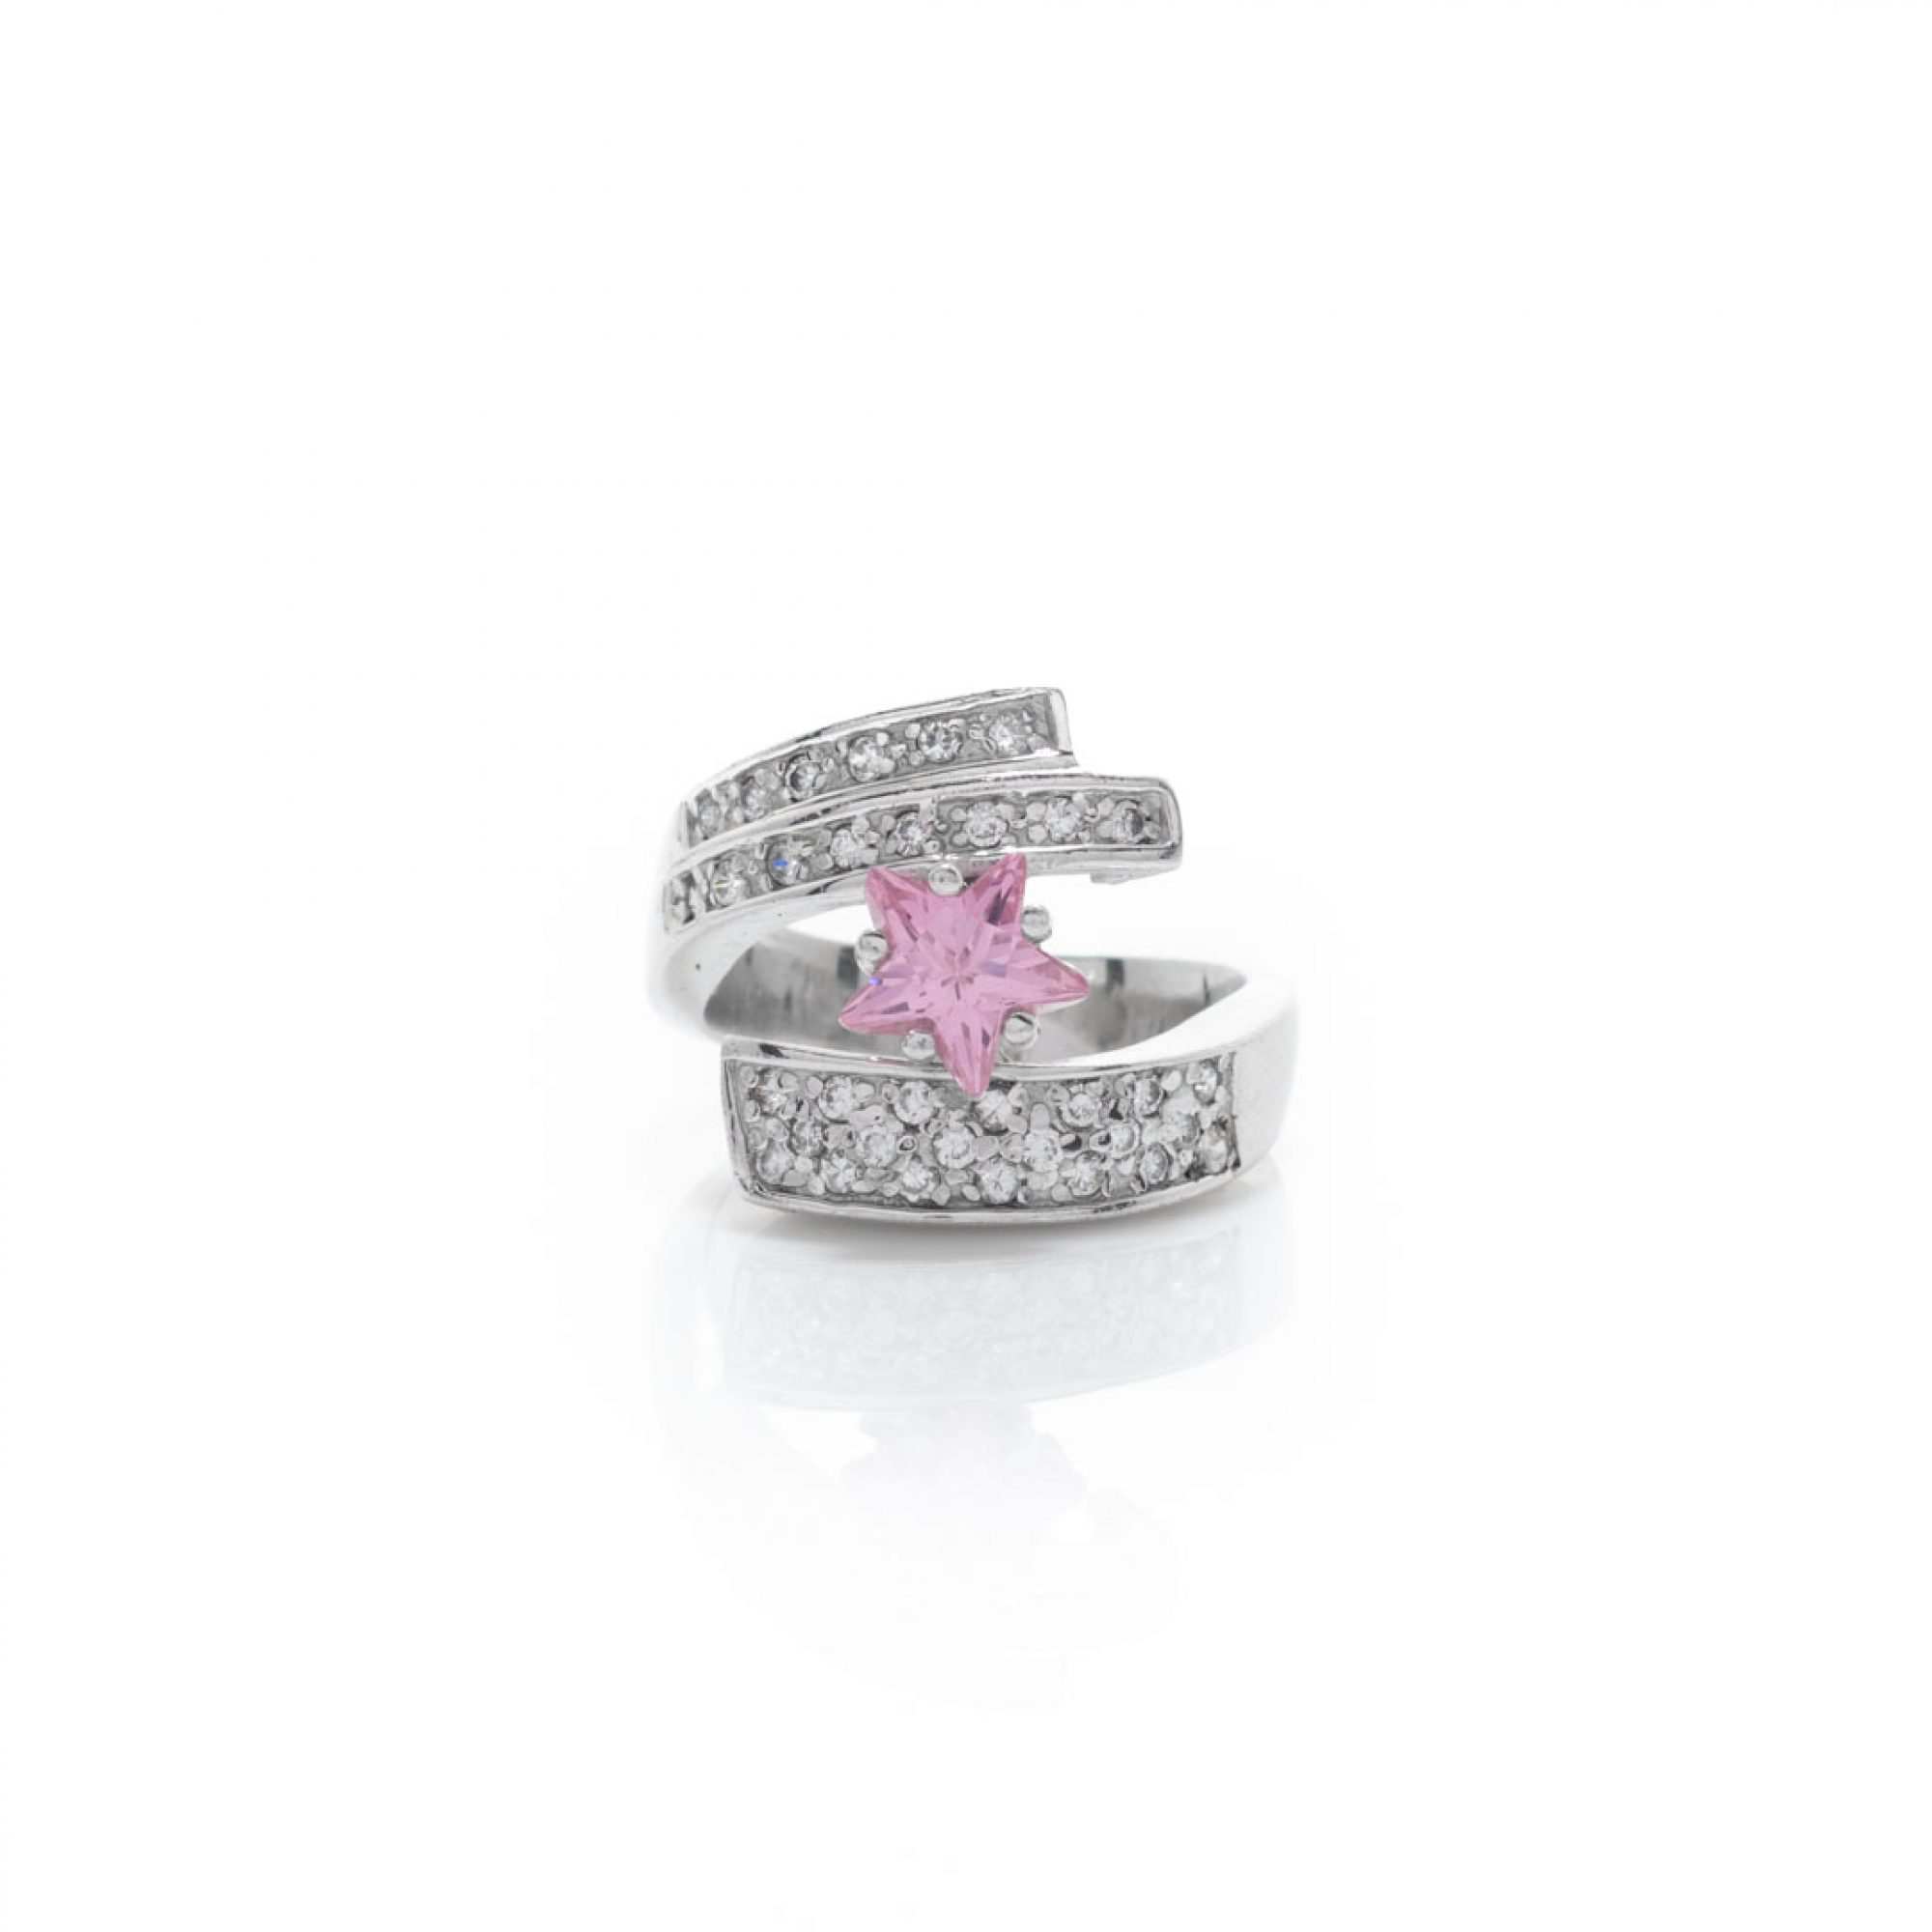 Ring with pink quartz and zircon stones